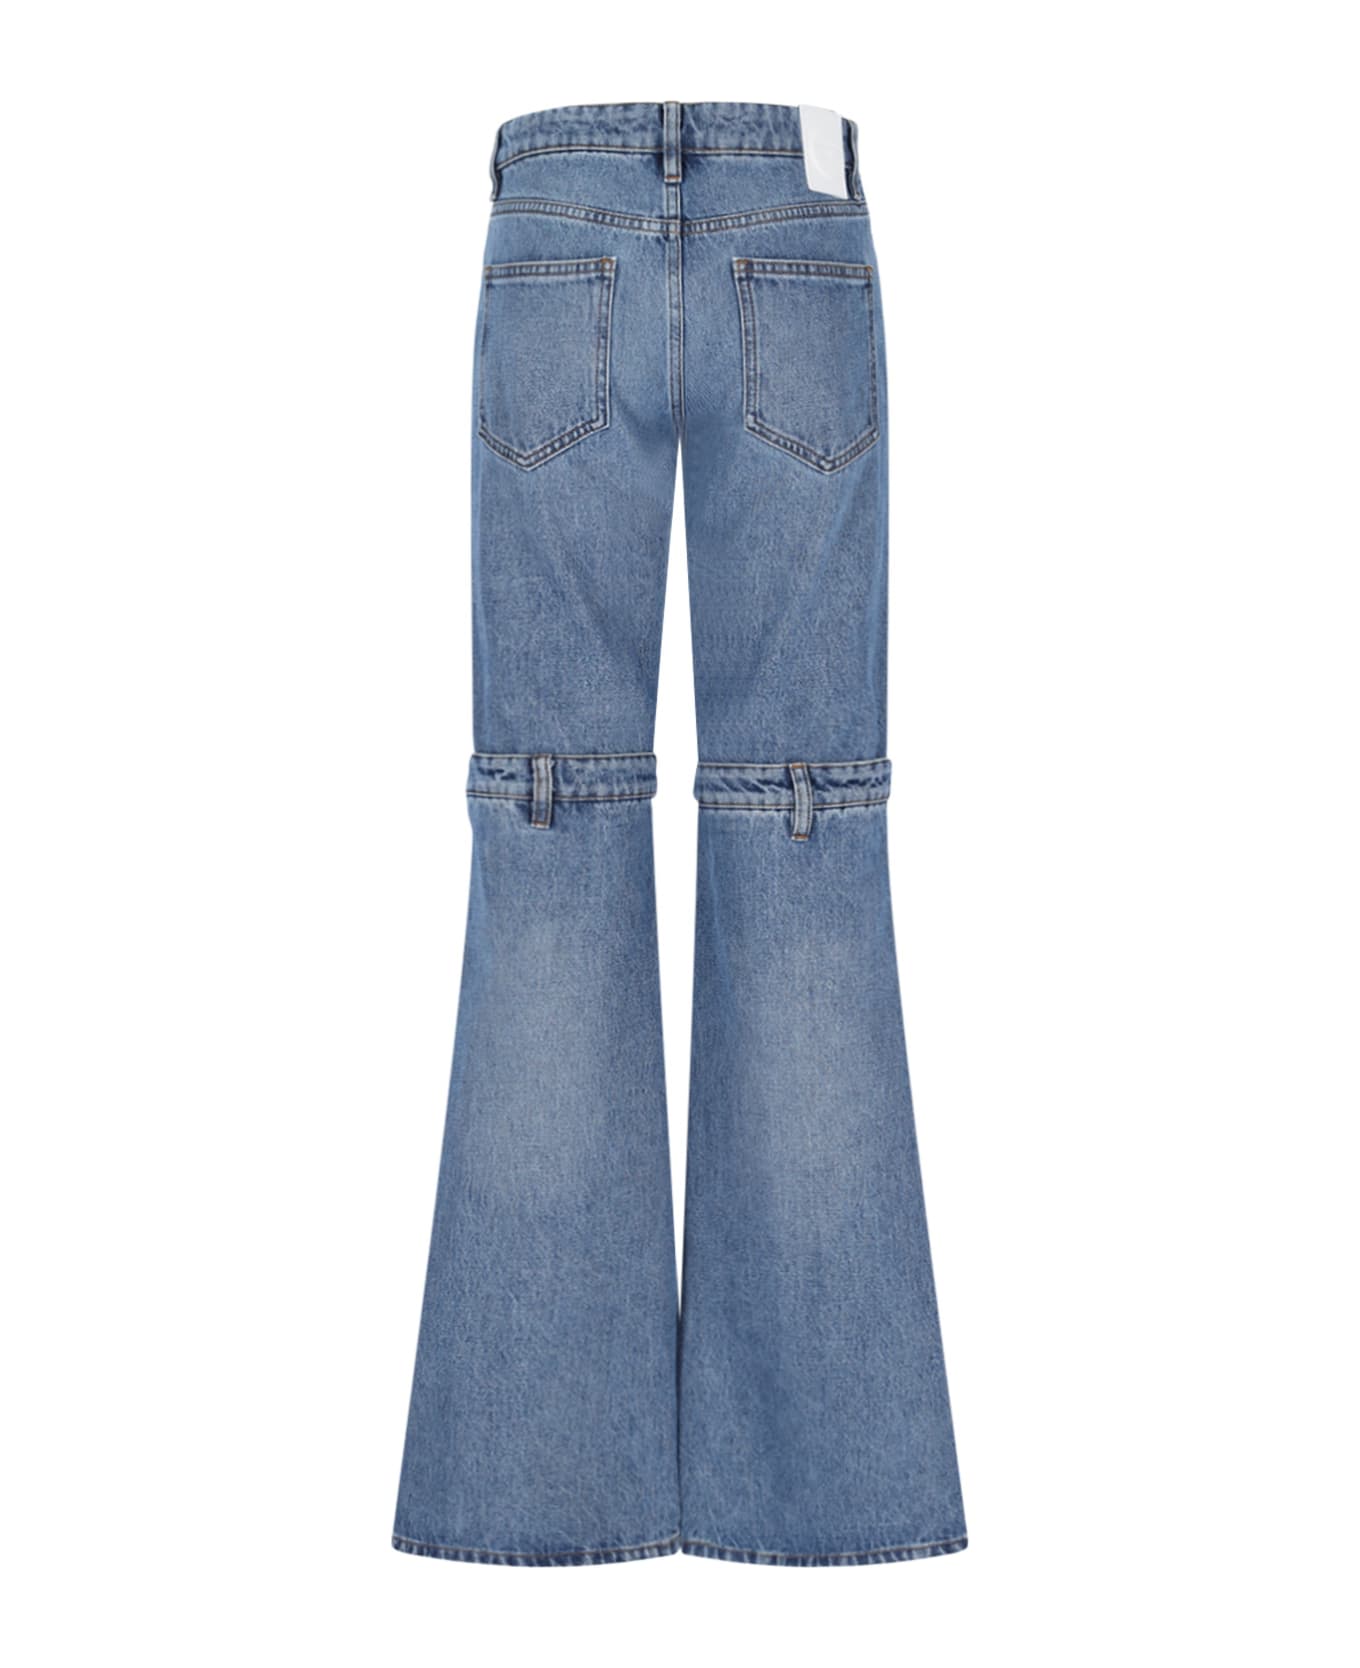 Coperni 'open Knee' Jeans - WASHED BLUE デニム